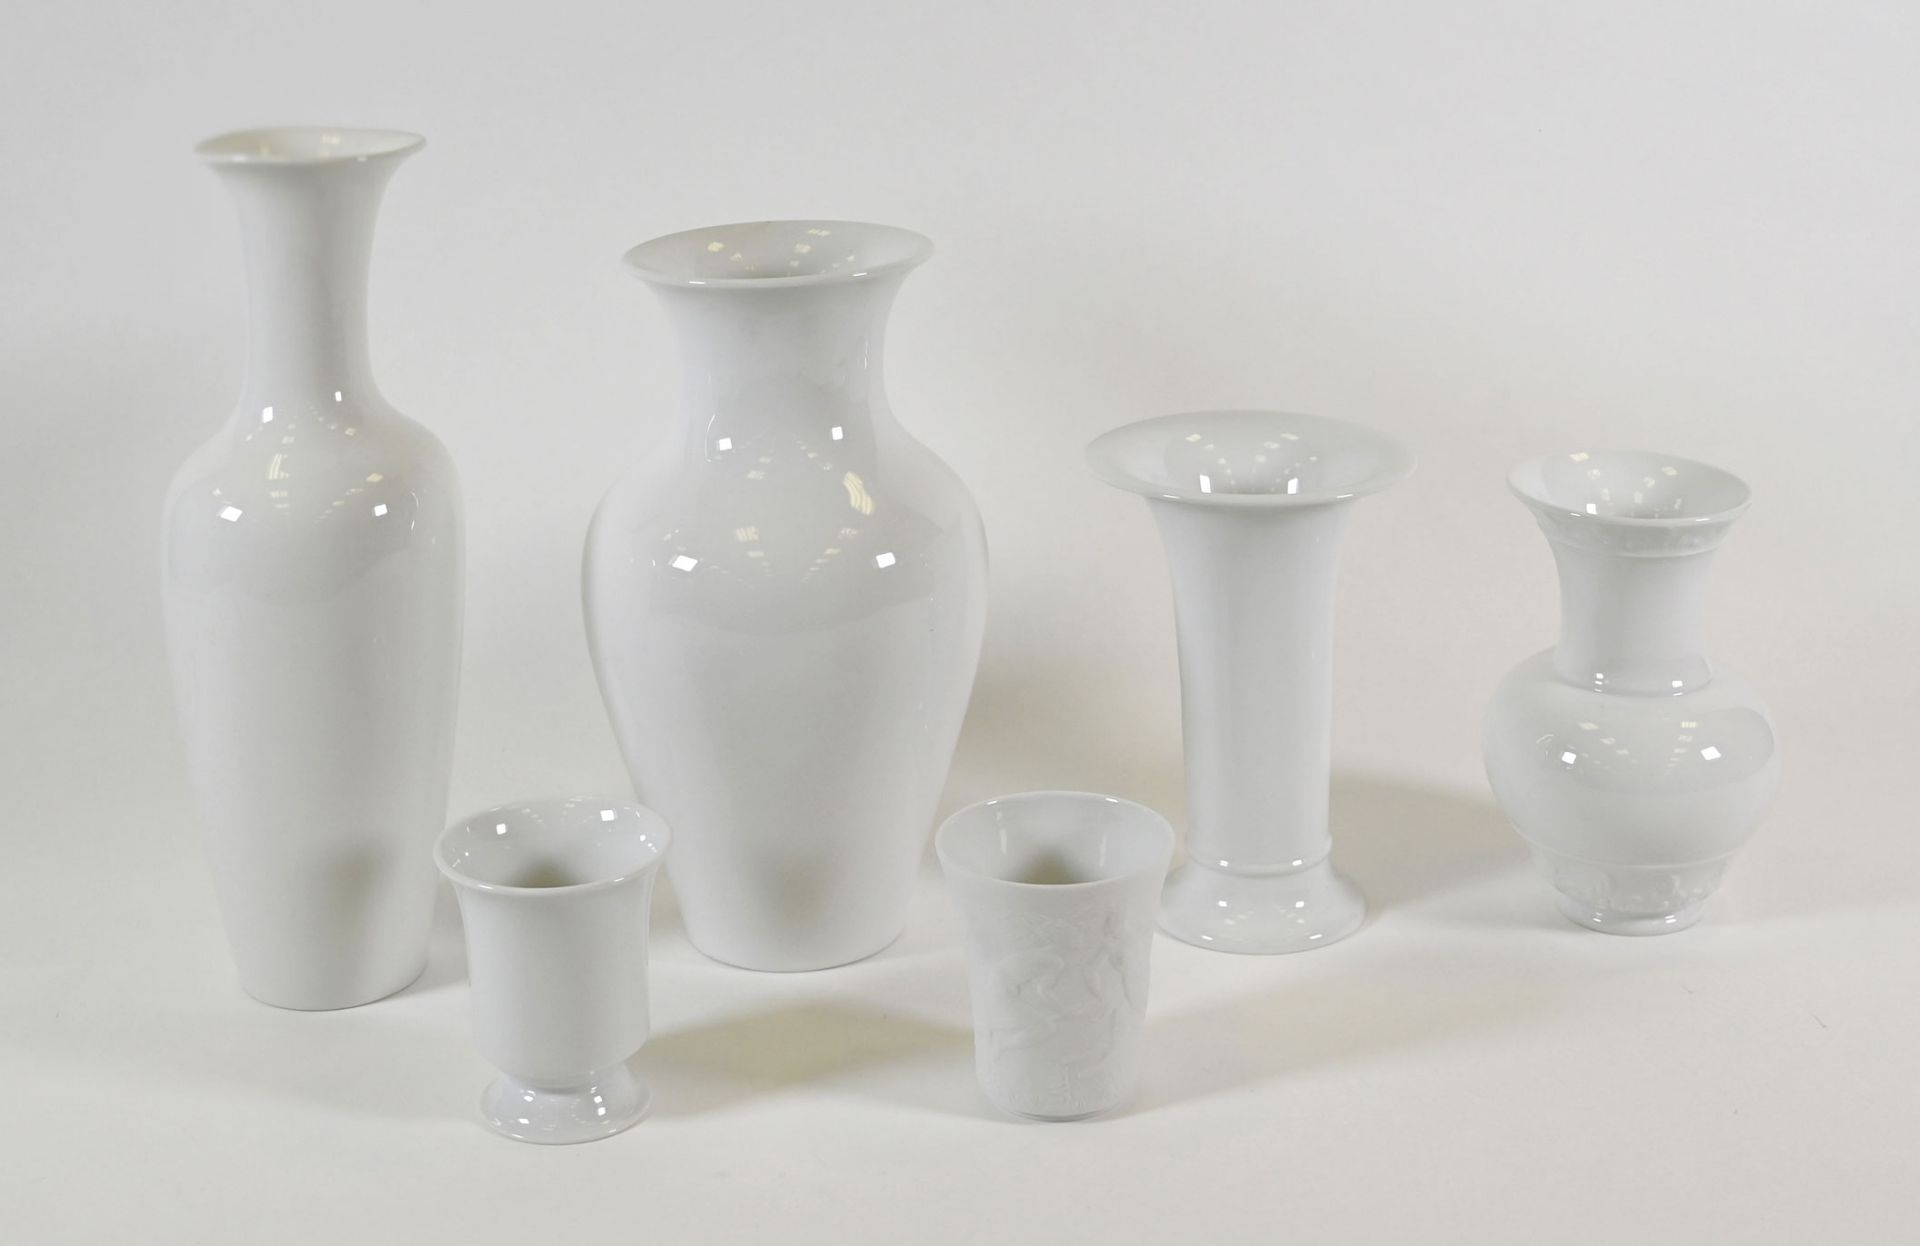 Sechs verschiedene Vasen, KPM Berlin